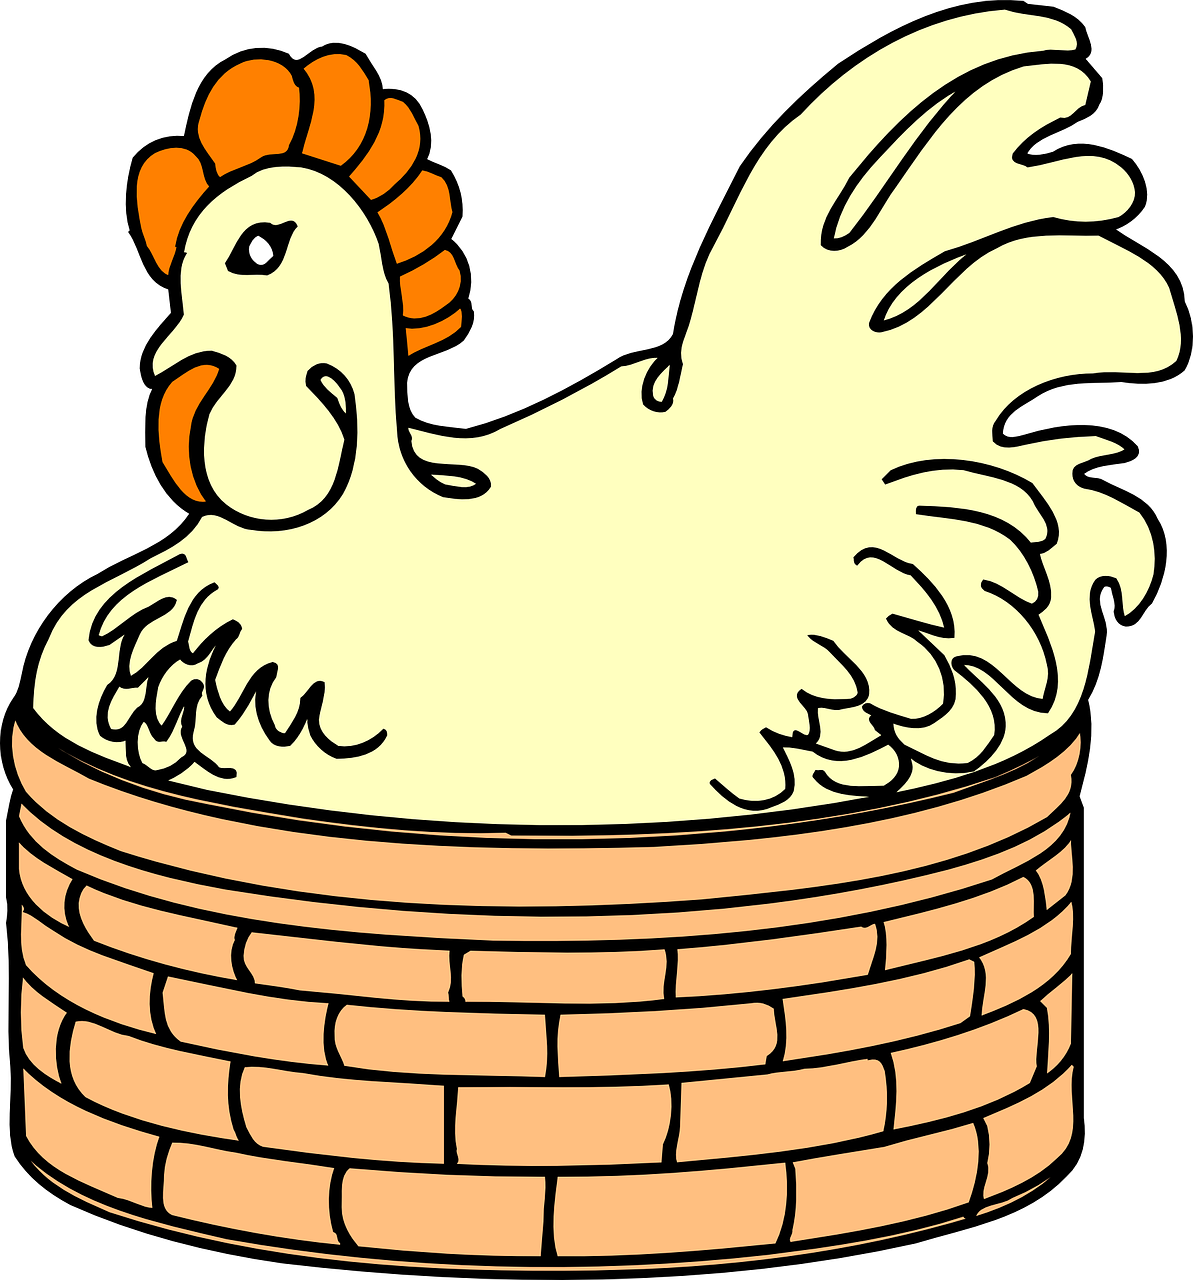 Animal Barn, Farm, Hen, Chicken, Sitting, Basket, Animal - Chicken & Capital Cities (1193x1280)